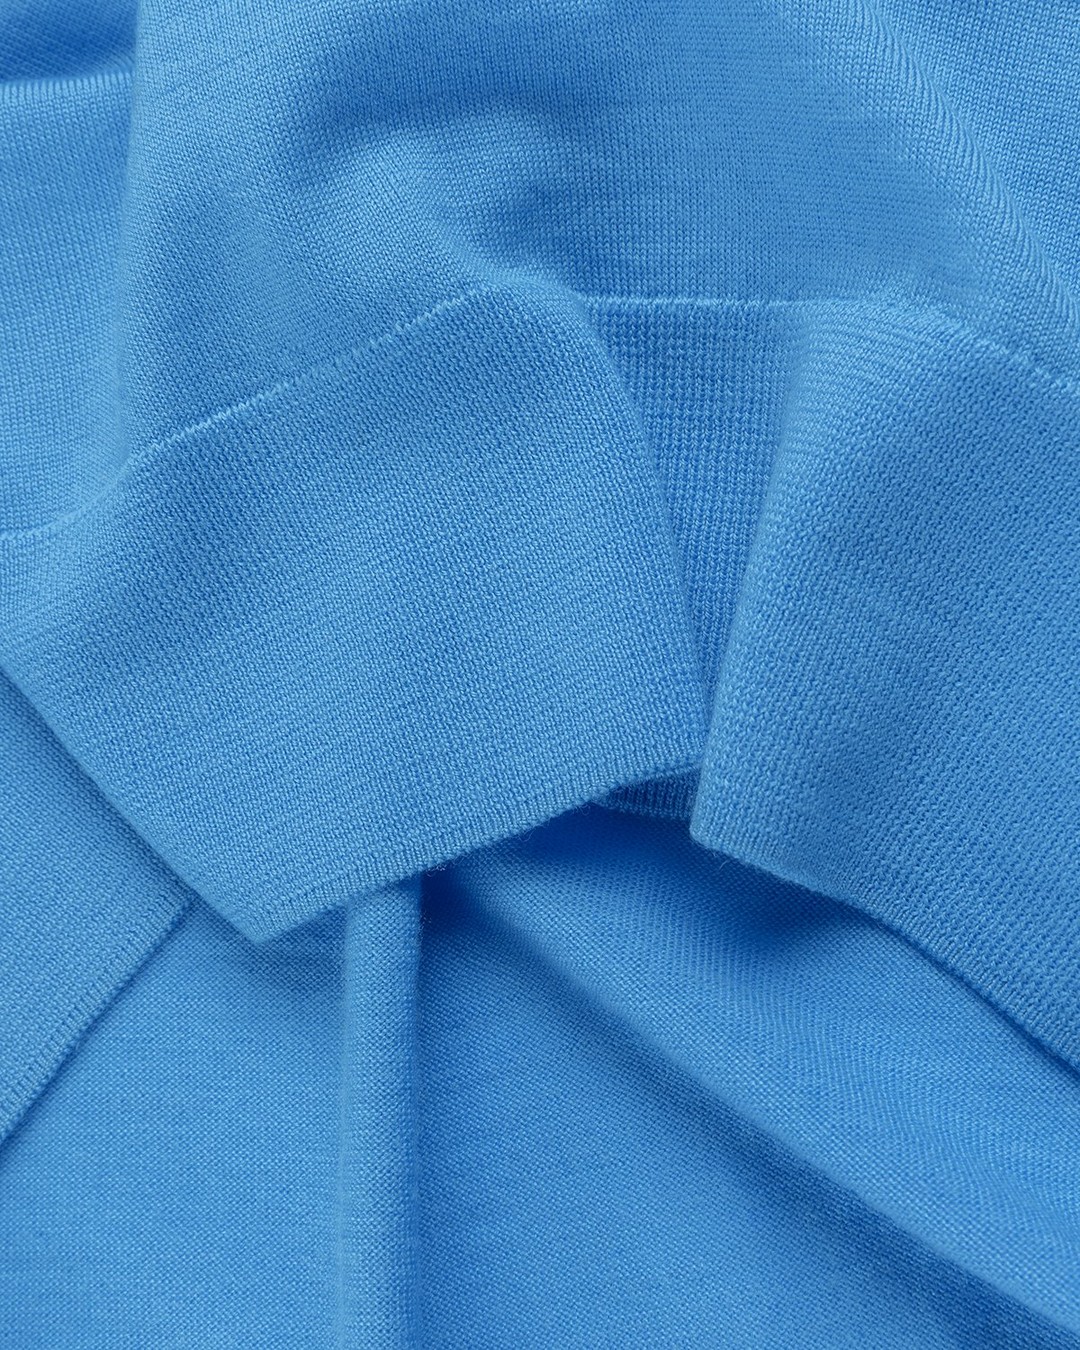 Dries van Noten – Merino Sleeveless Sweater Madonna - Gilets - Blue - Image 5